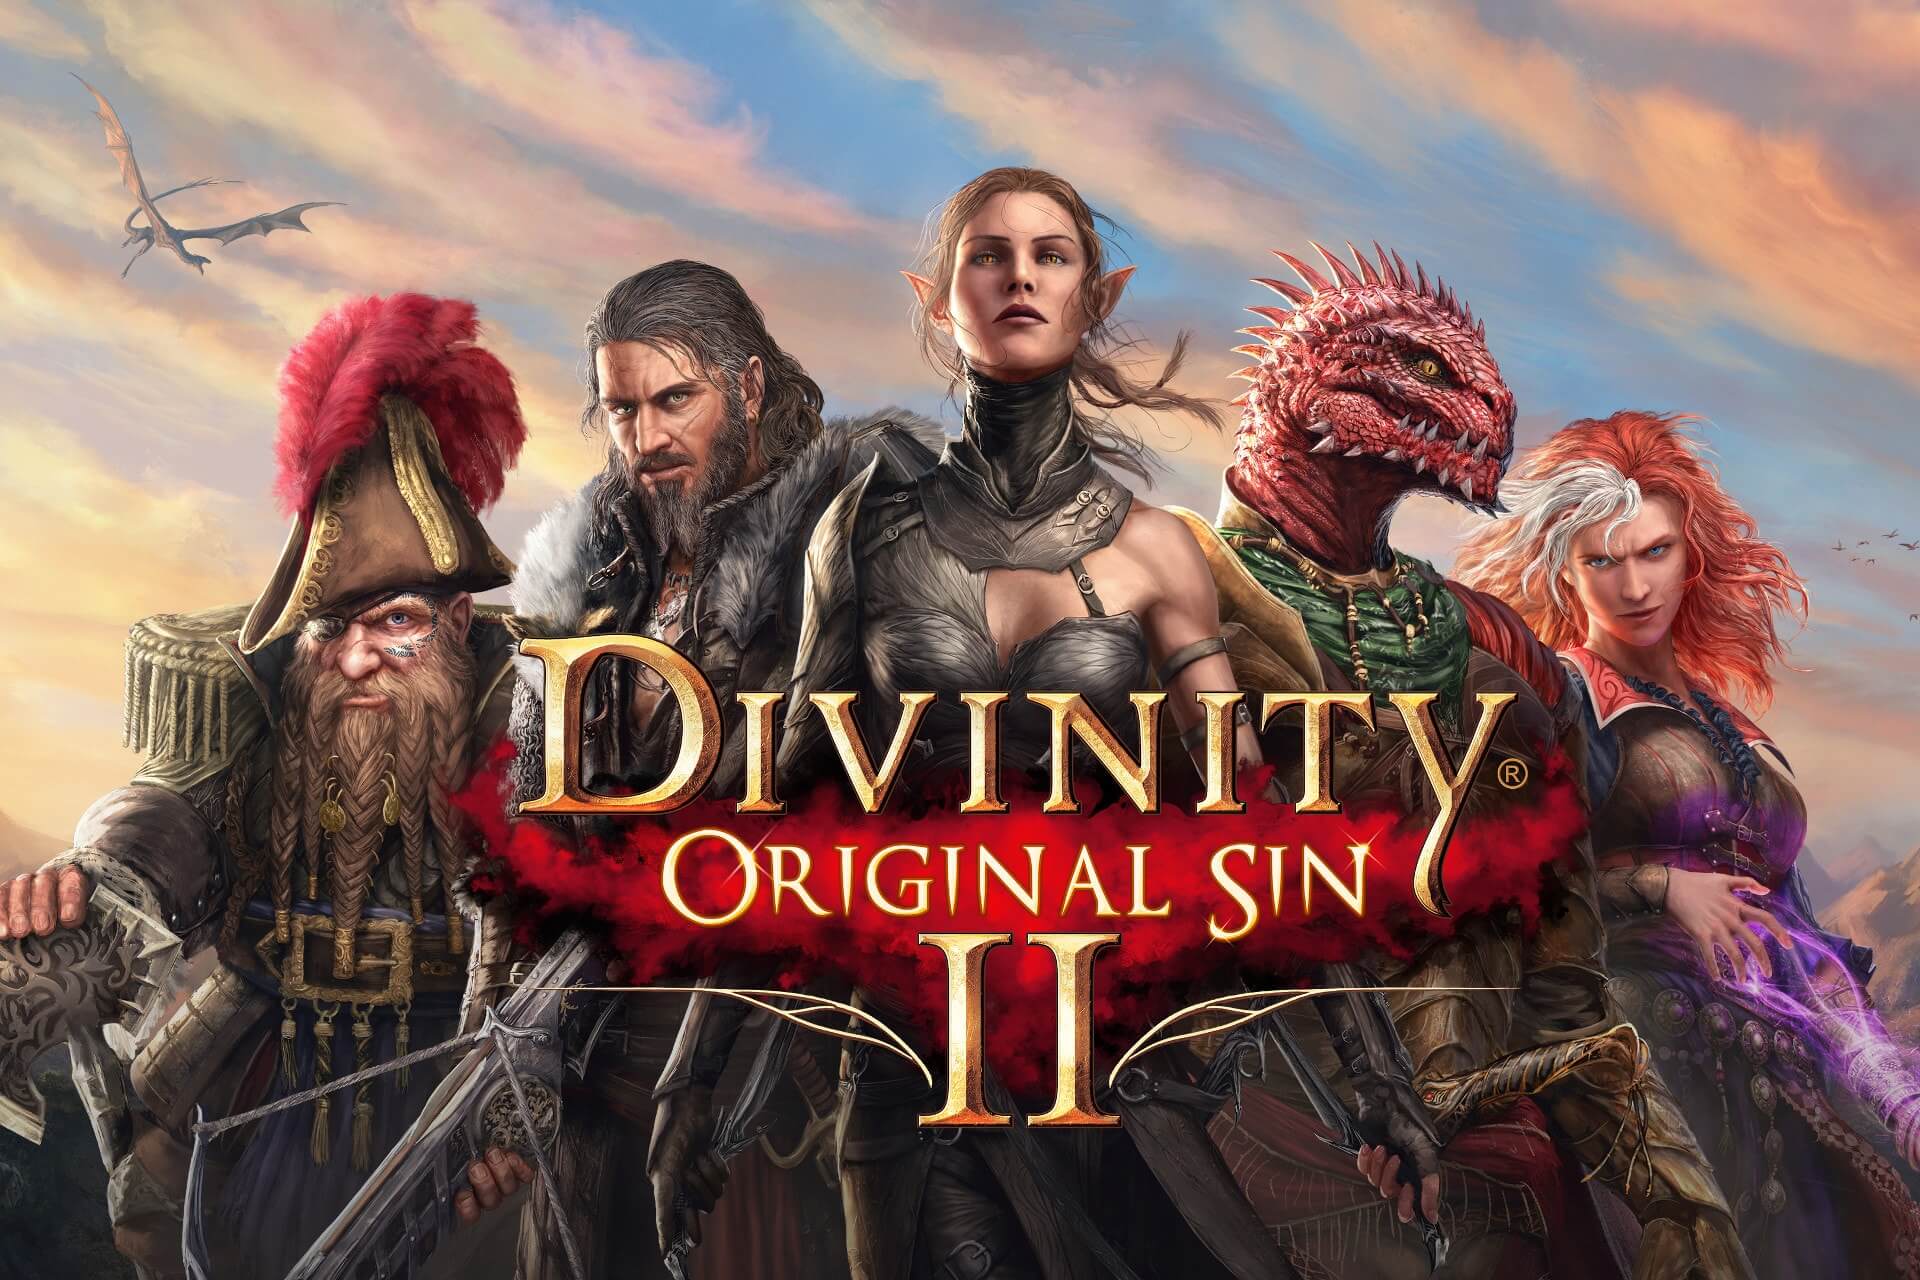 fix Divinity Original Sin 2 lag with VPN